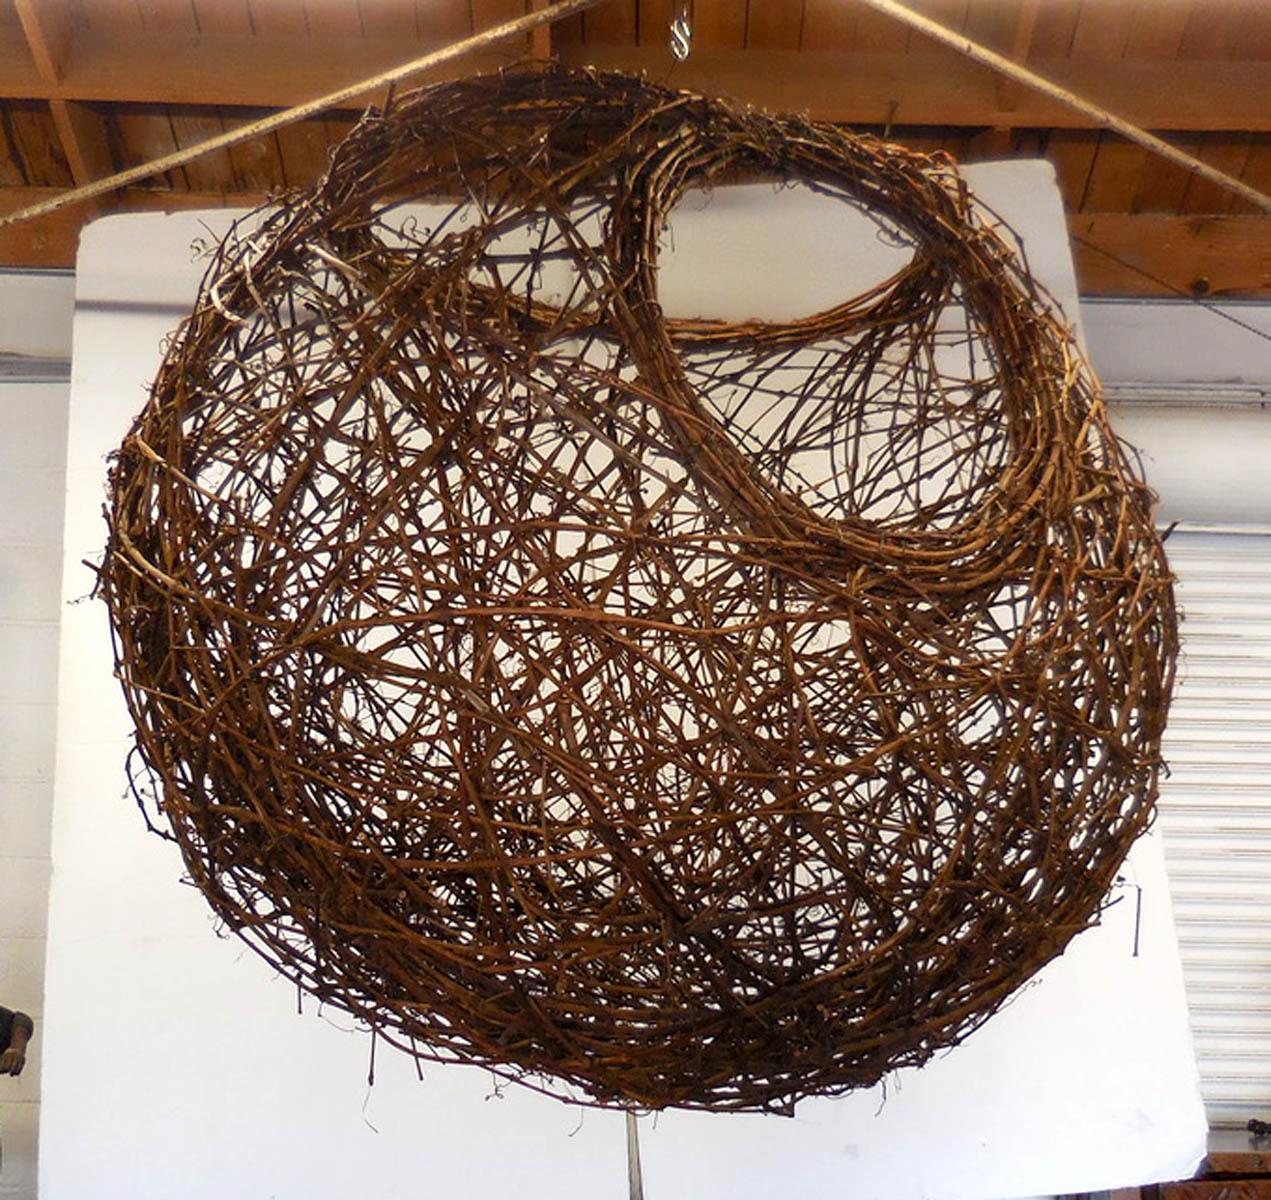 Gigantic Grapevine Bird's Nest Sculpture 2